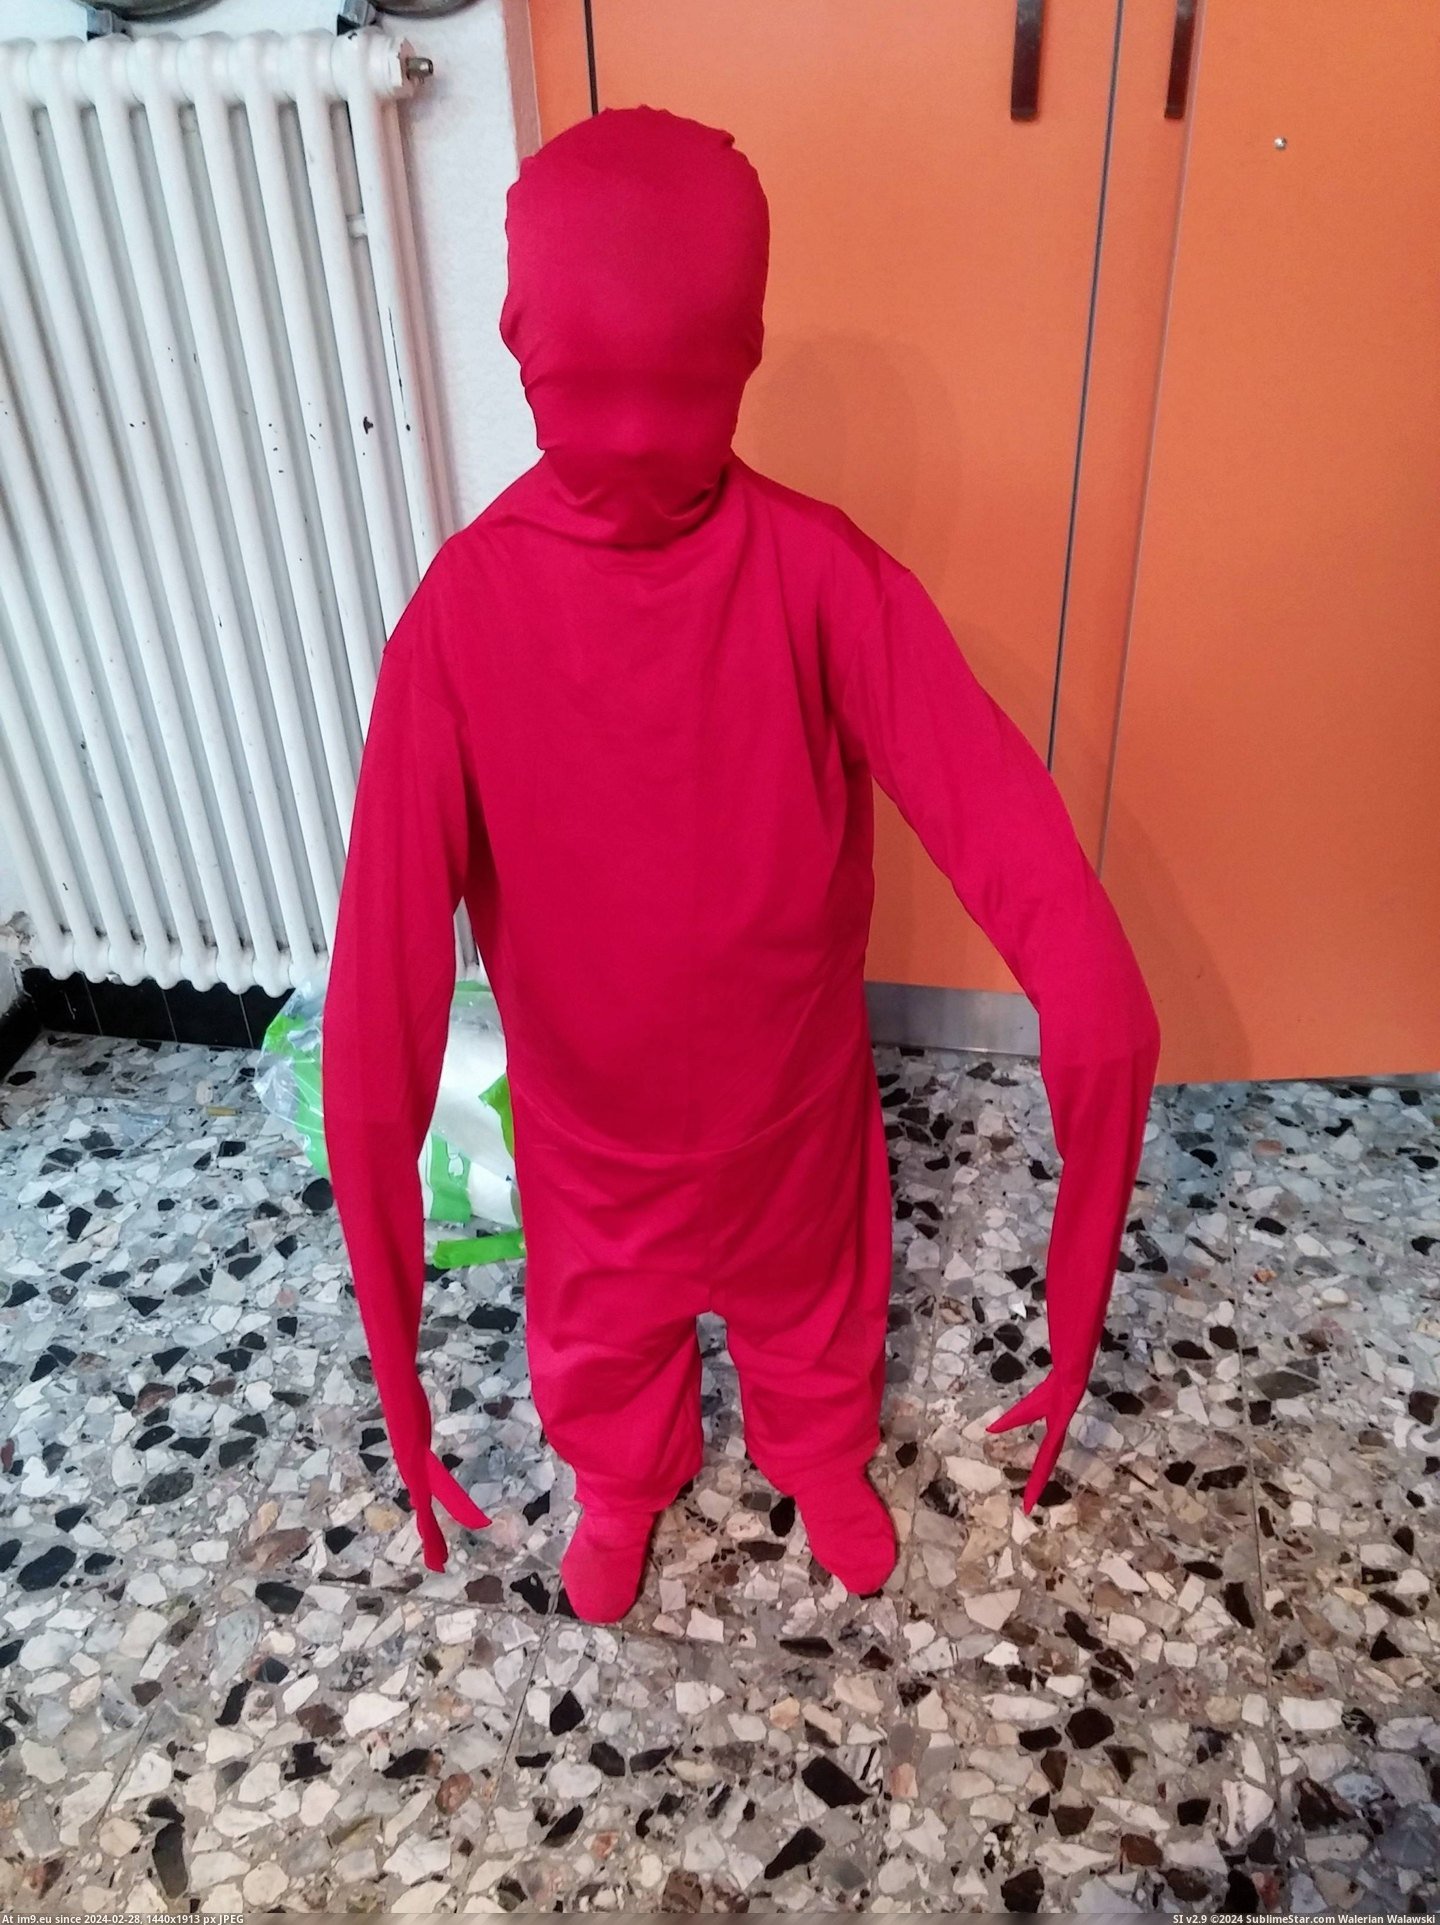 #Son #Terrifying #Morph #Suit [Pics] my son found my morph suit and it's terrifying Pic. (Изображение из альбом My r/PICS favs))